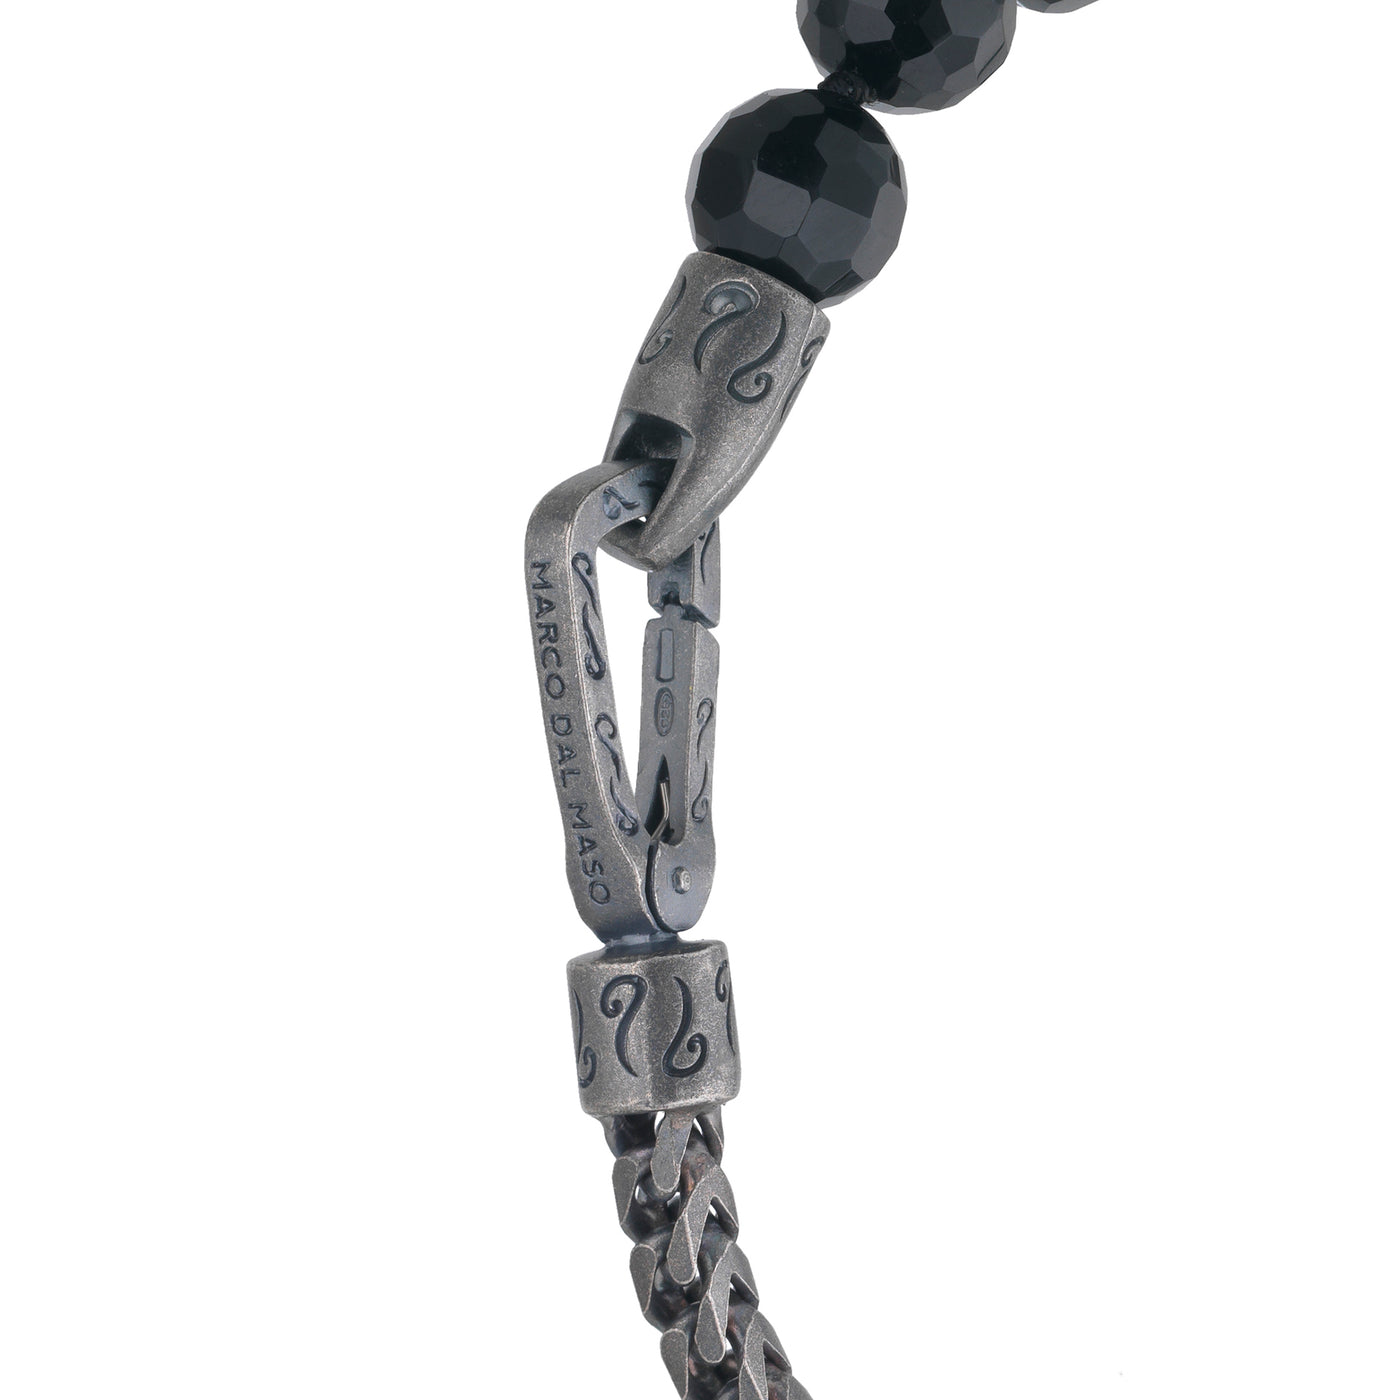 ULYSSES Faceted Beaded Onyx Chain Single Bracelet